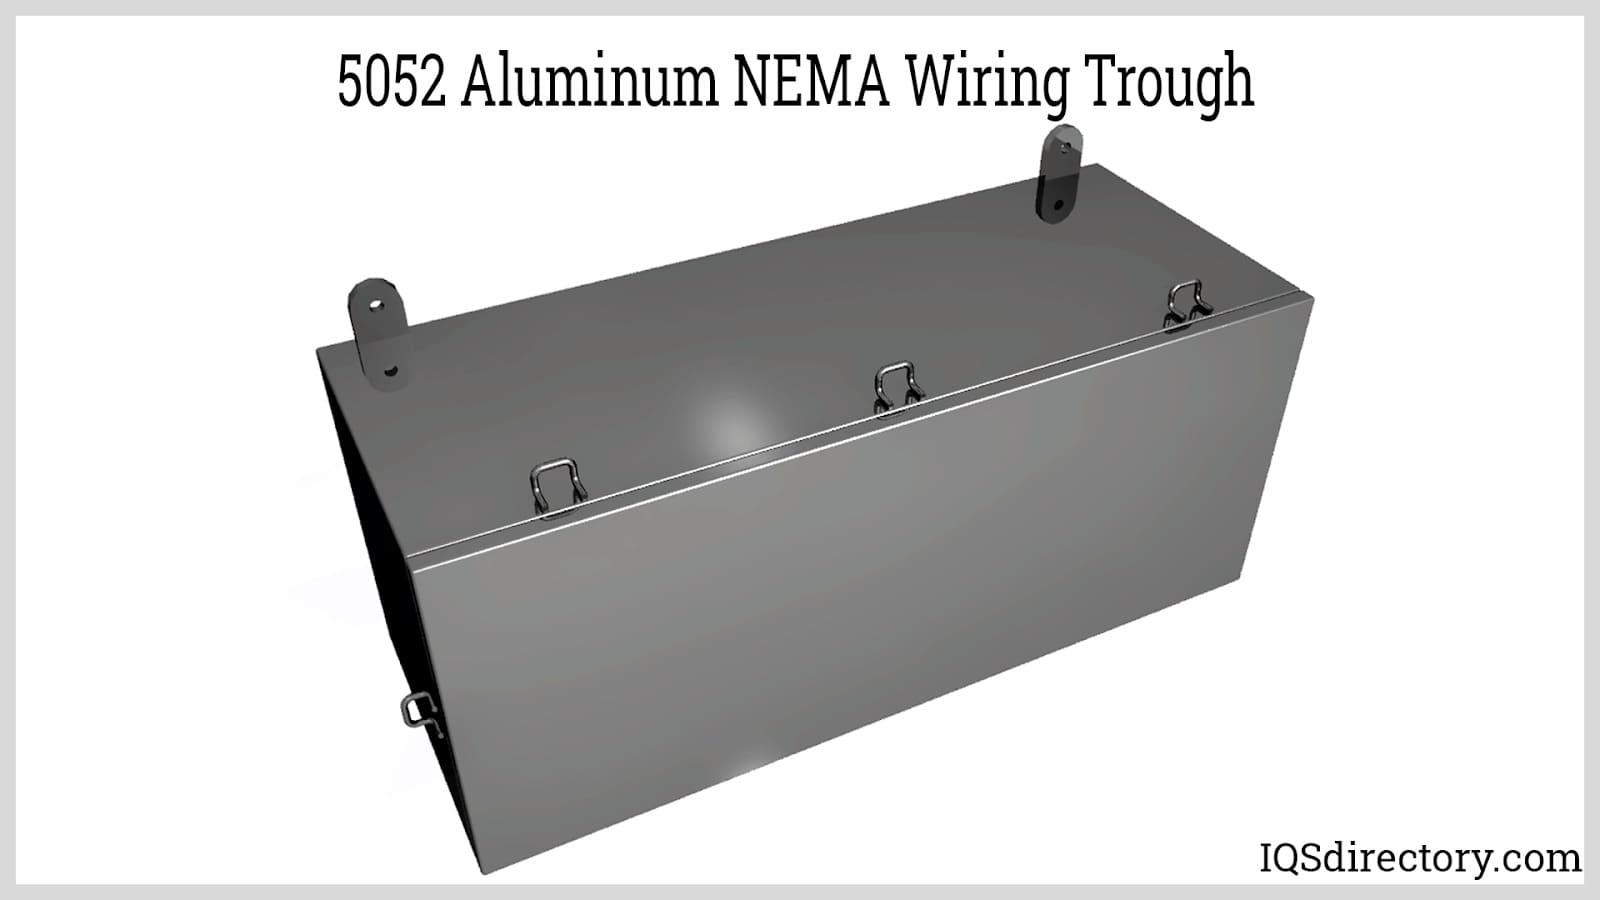 5052 Aluminum NEMA Wiring Trough